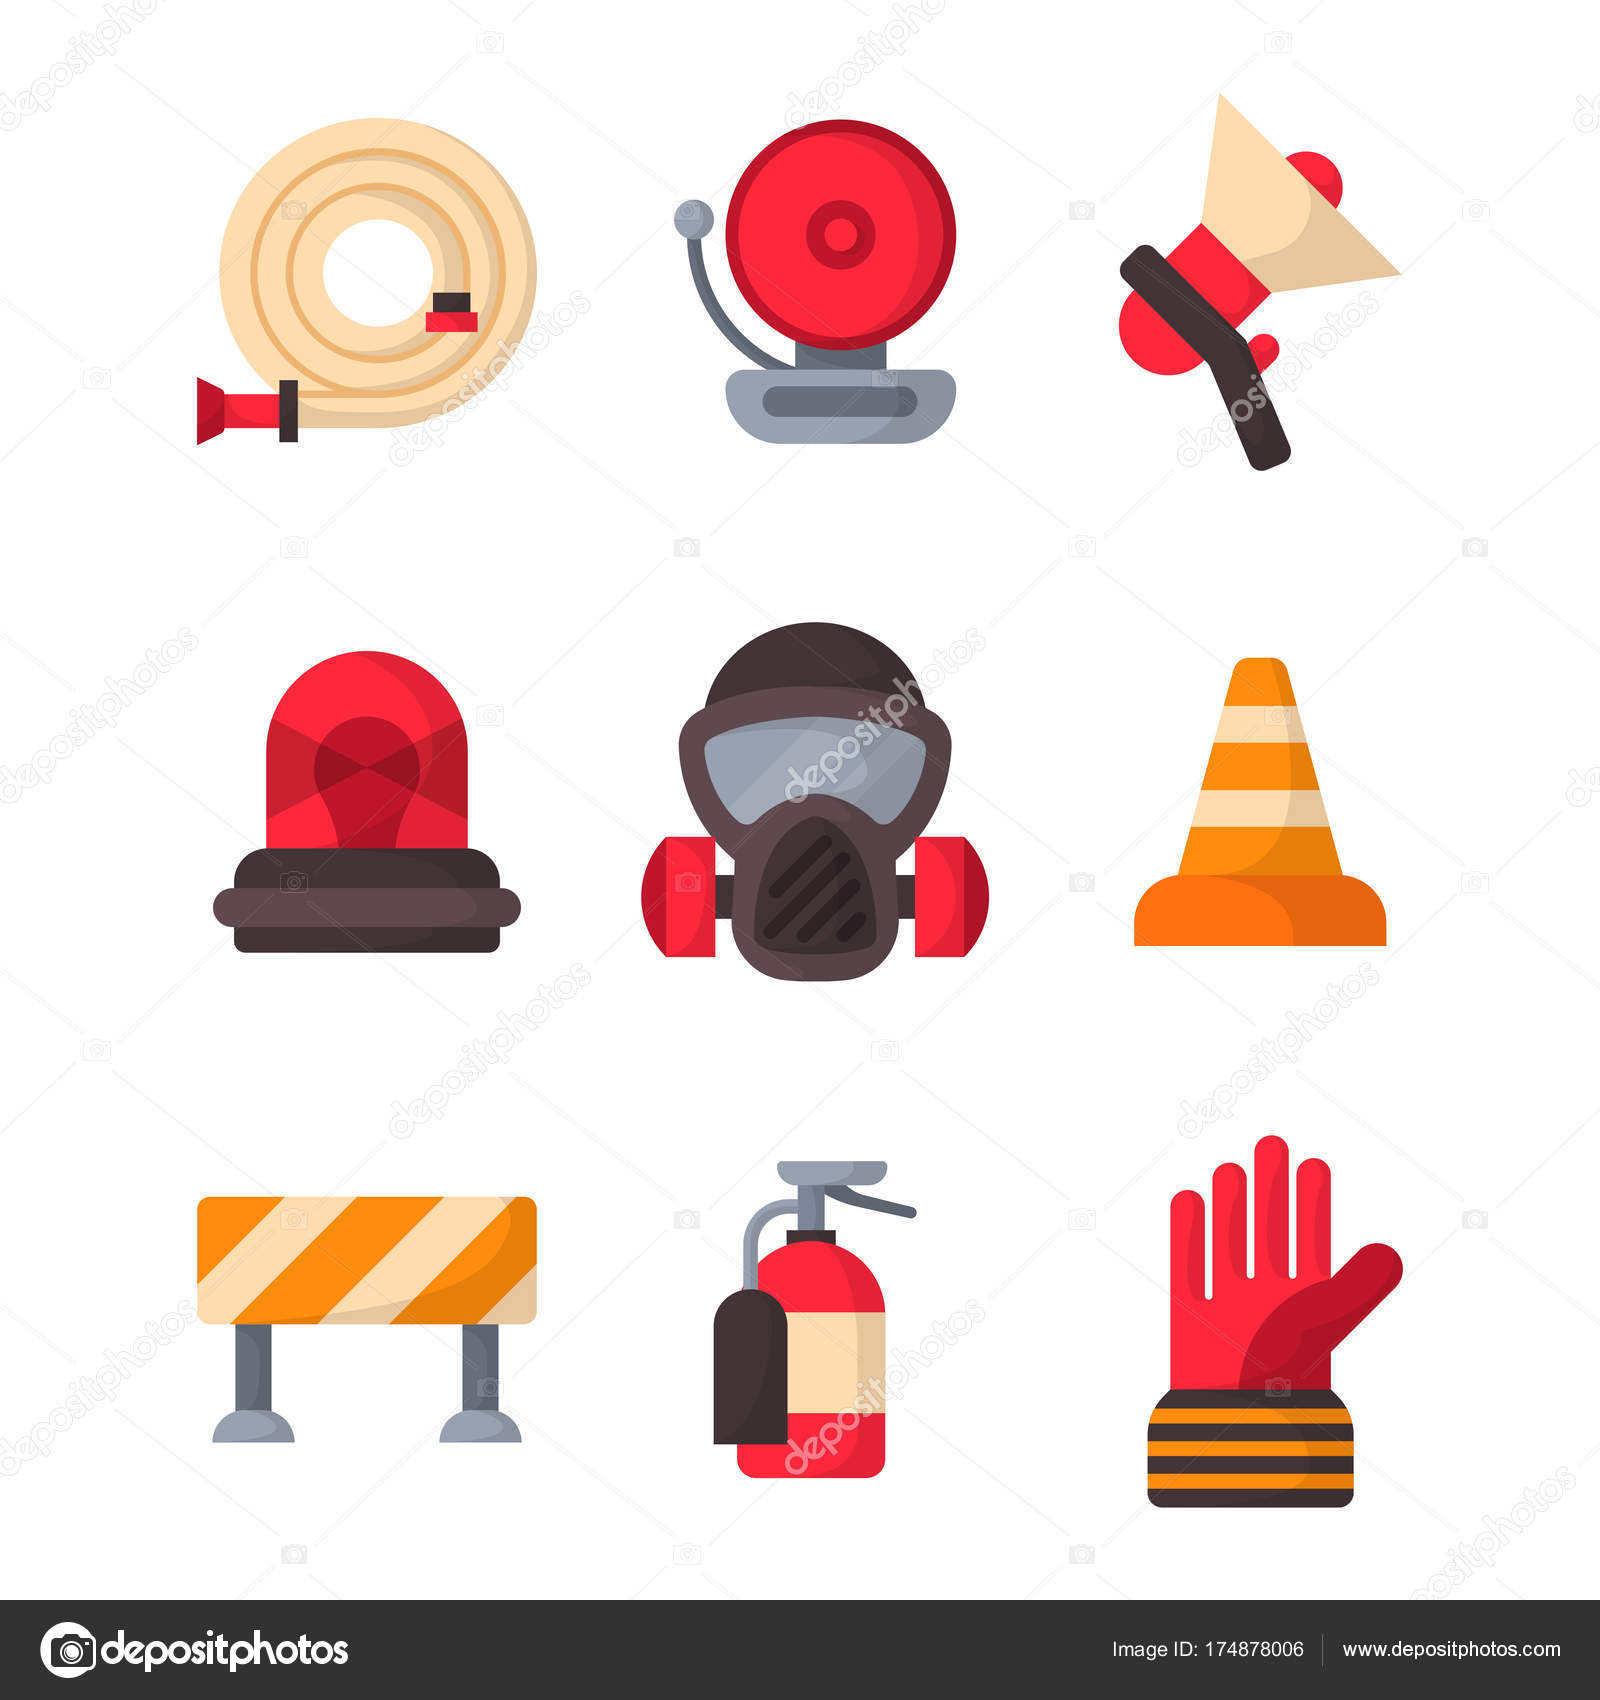 https://st3.depositphotos.com/10665628/17487/v/1600/depositphotos_174878006-stock-illustration-fire-safety-equipment-emergency-tools.jpg